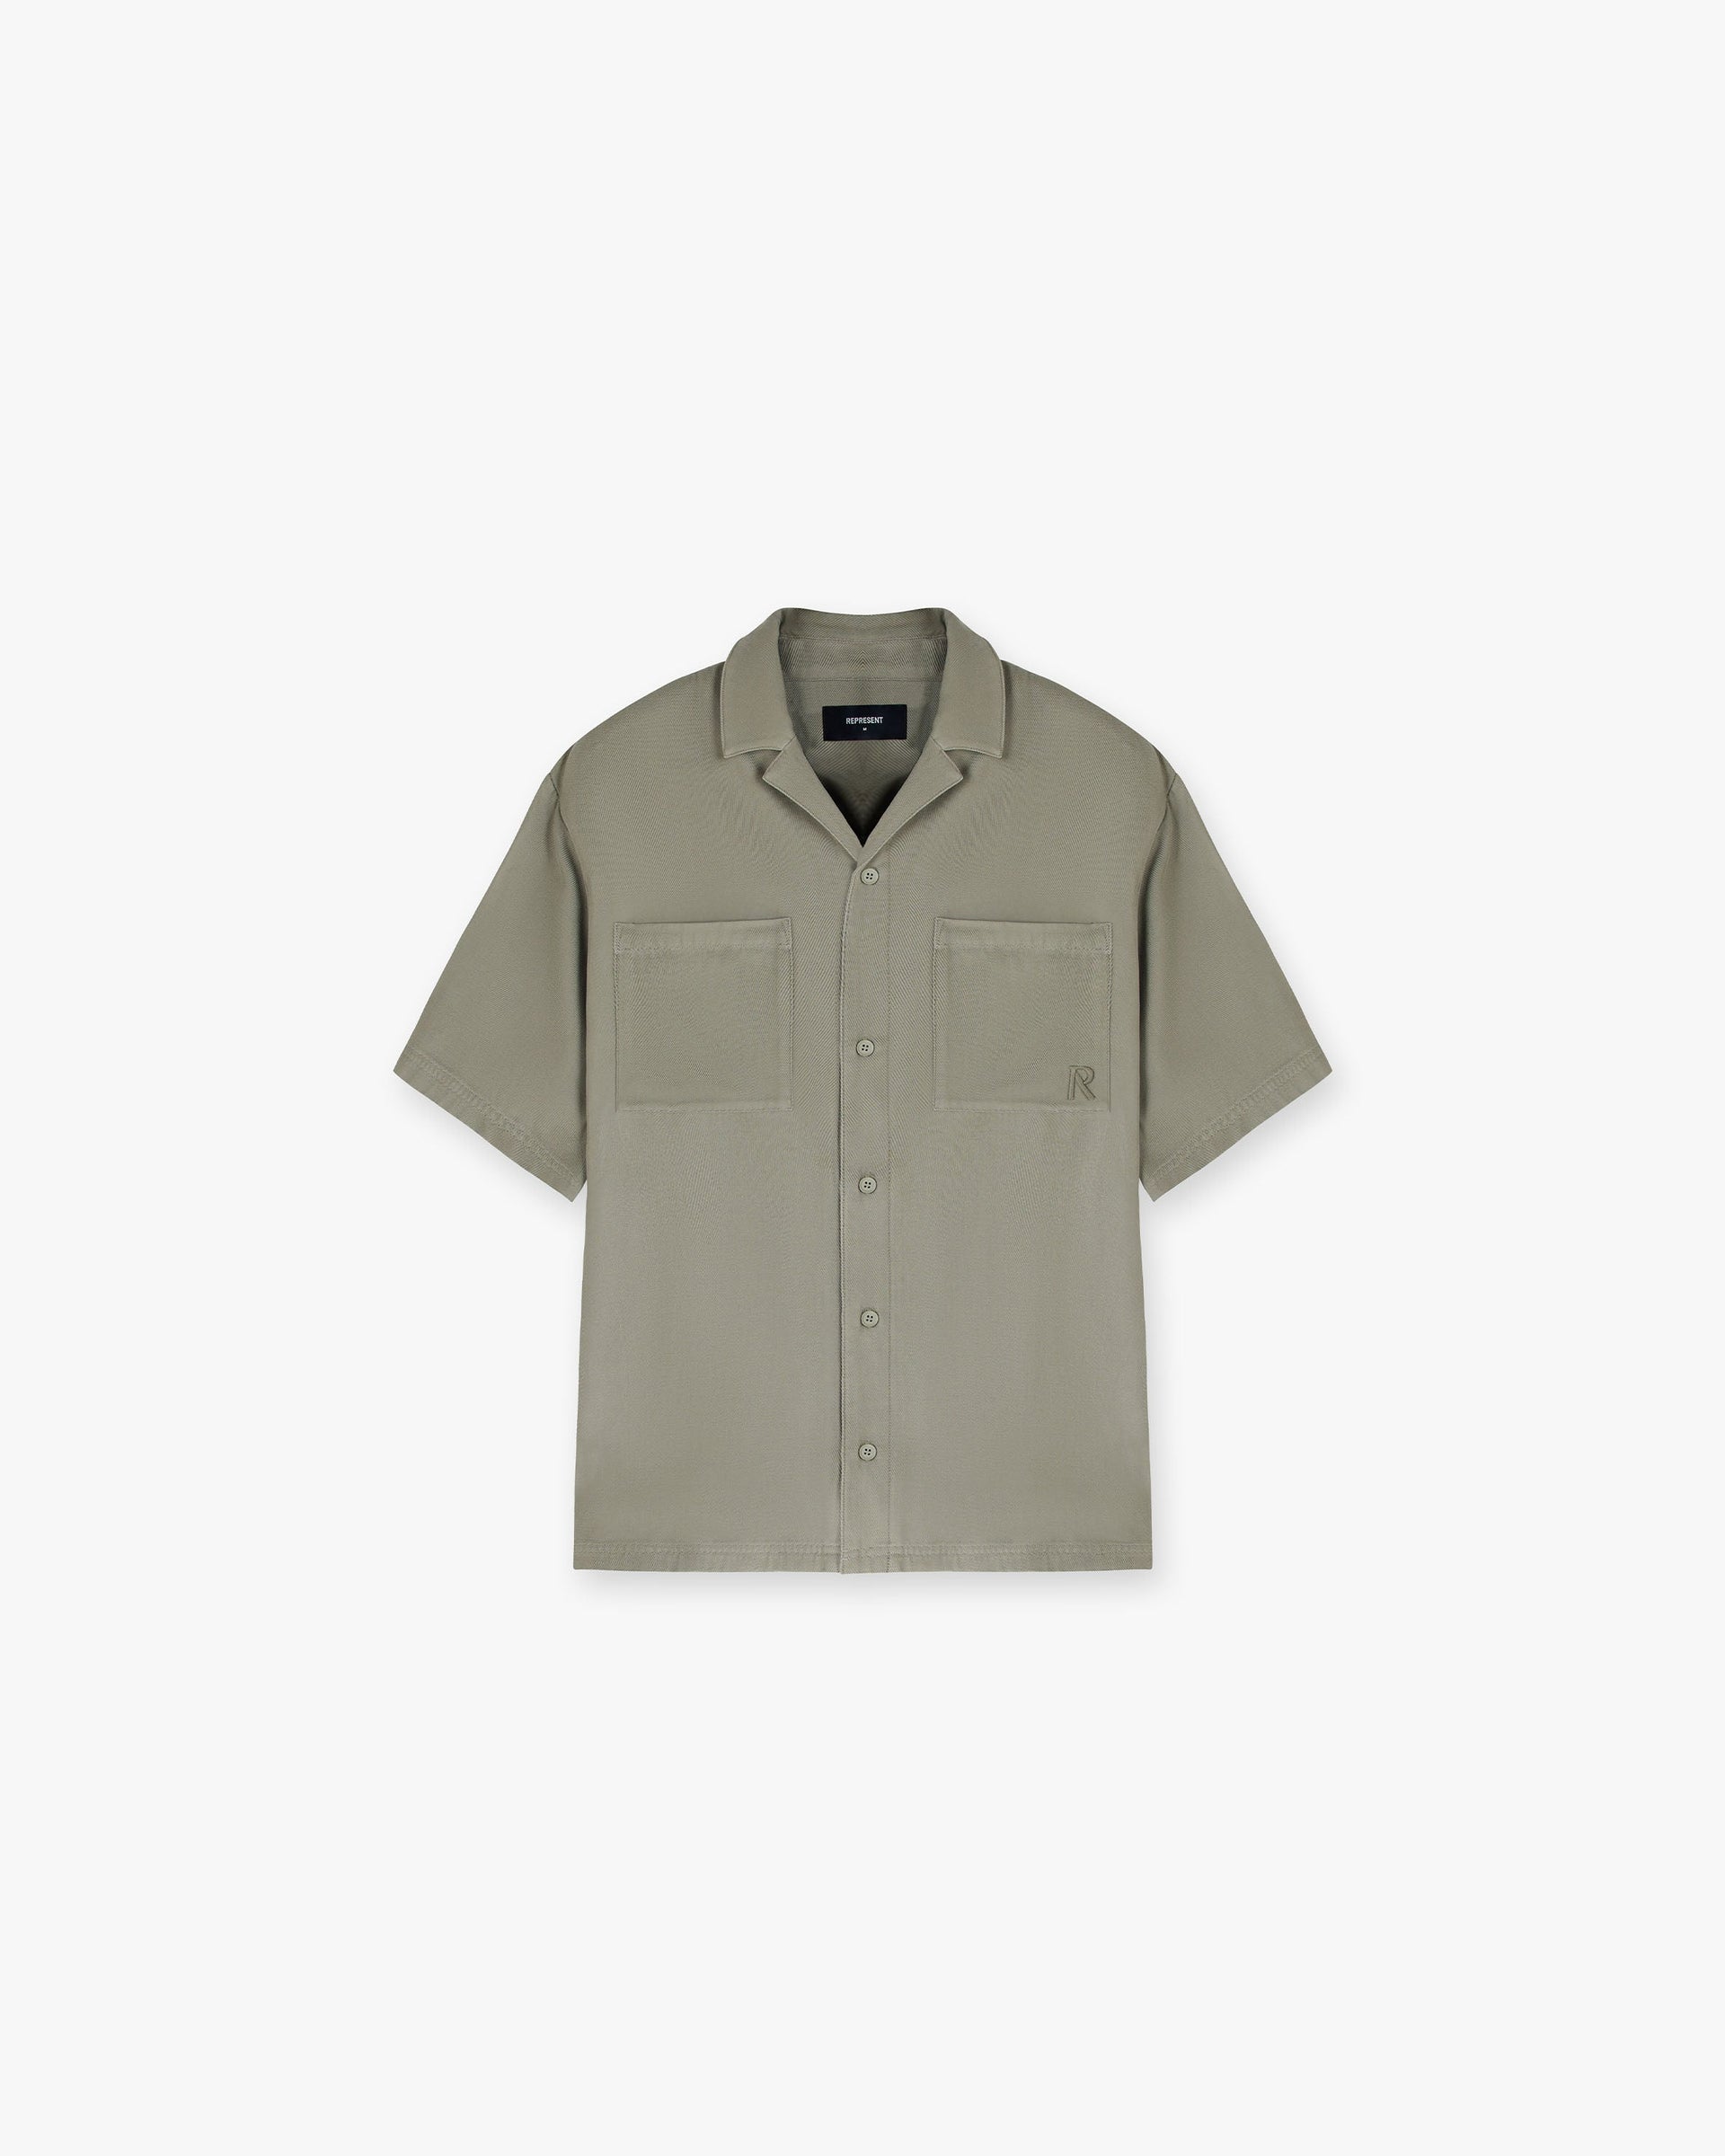 Yacht Shirt | Khaki Shirts SC23 | Represent Clo